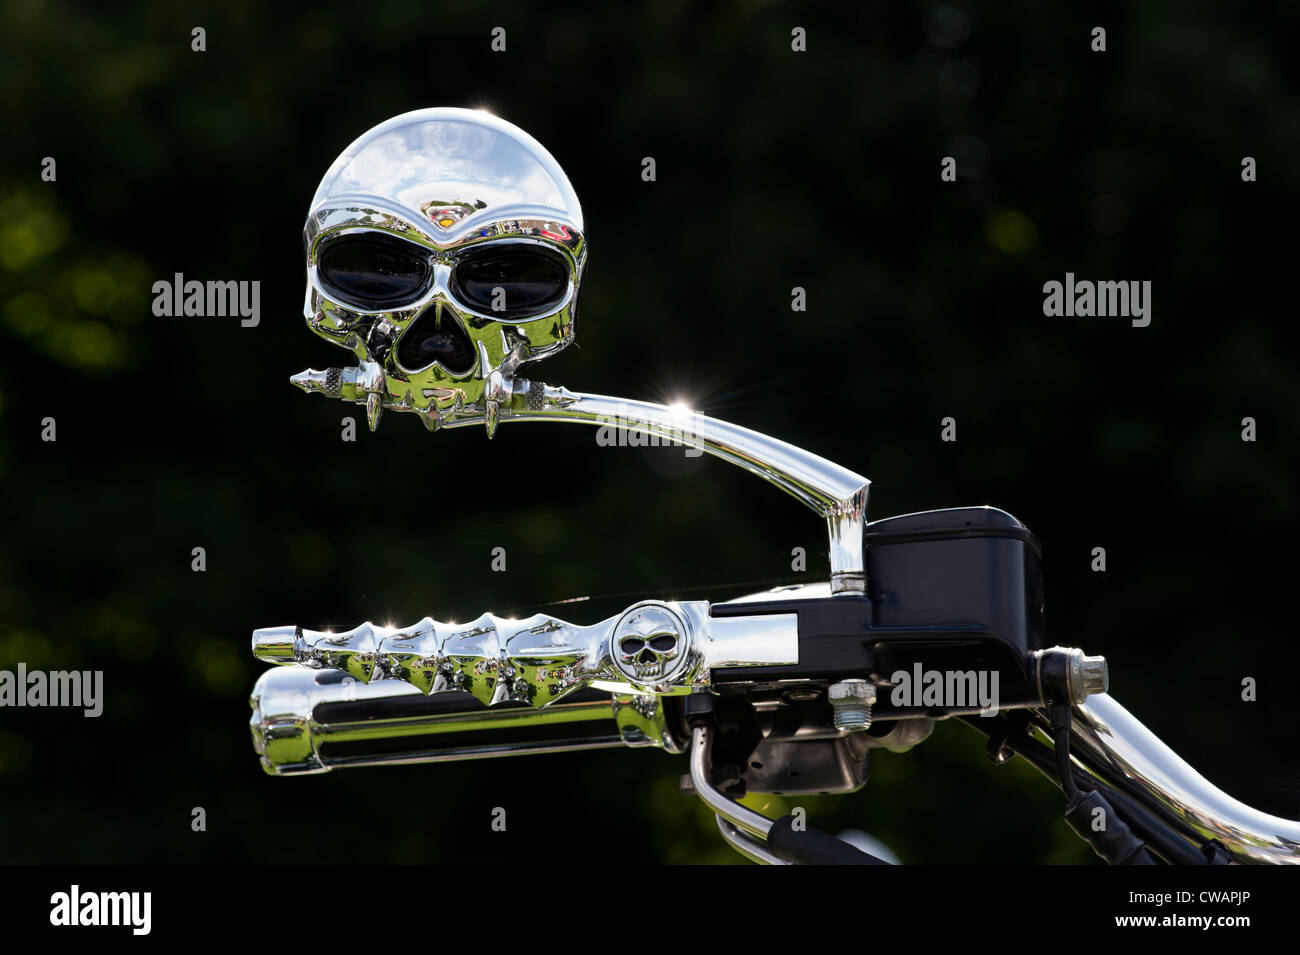 Harley Davidson motorcycle skull handlebar brake lever and wing mirror Stock Photo